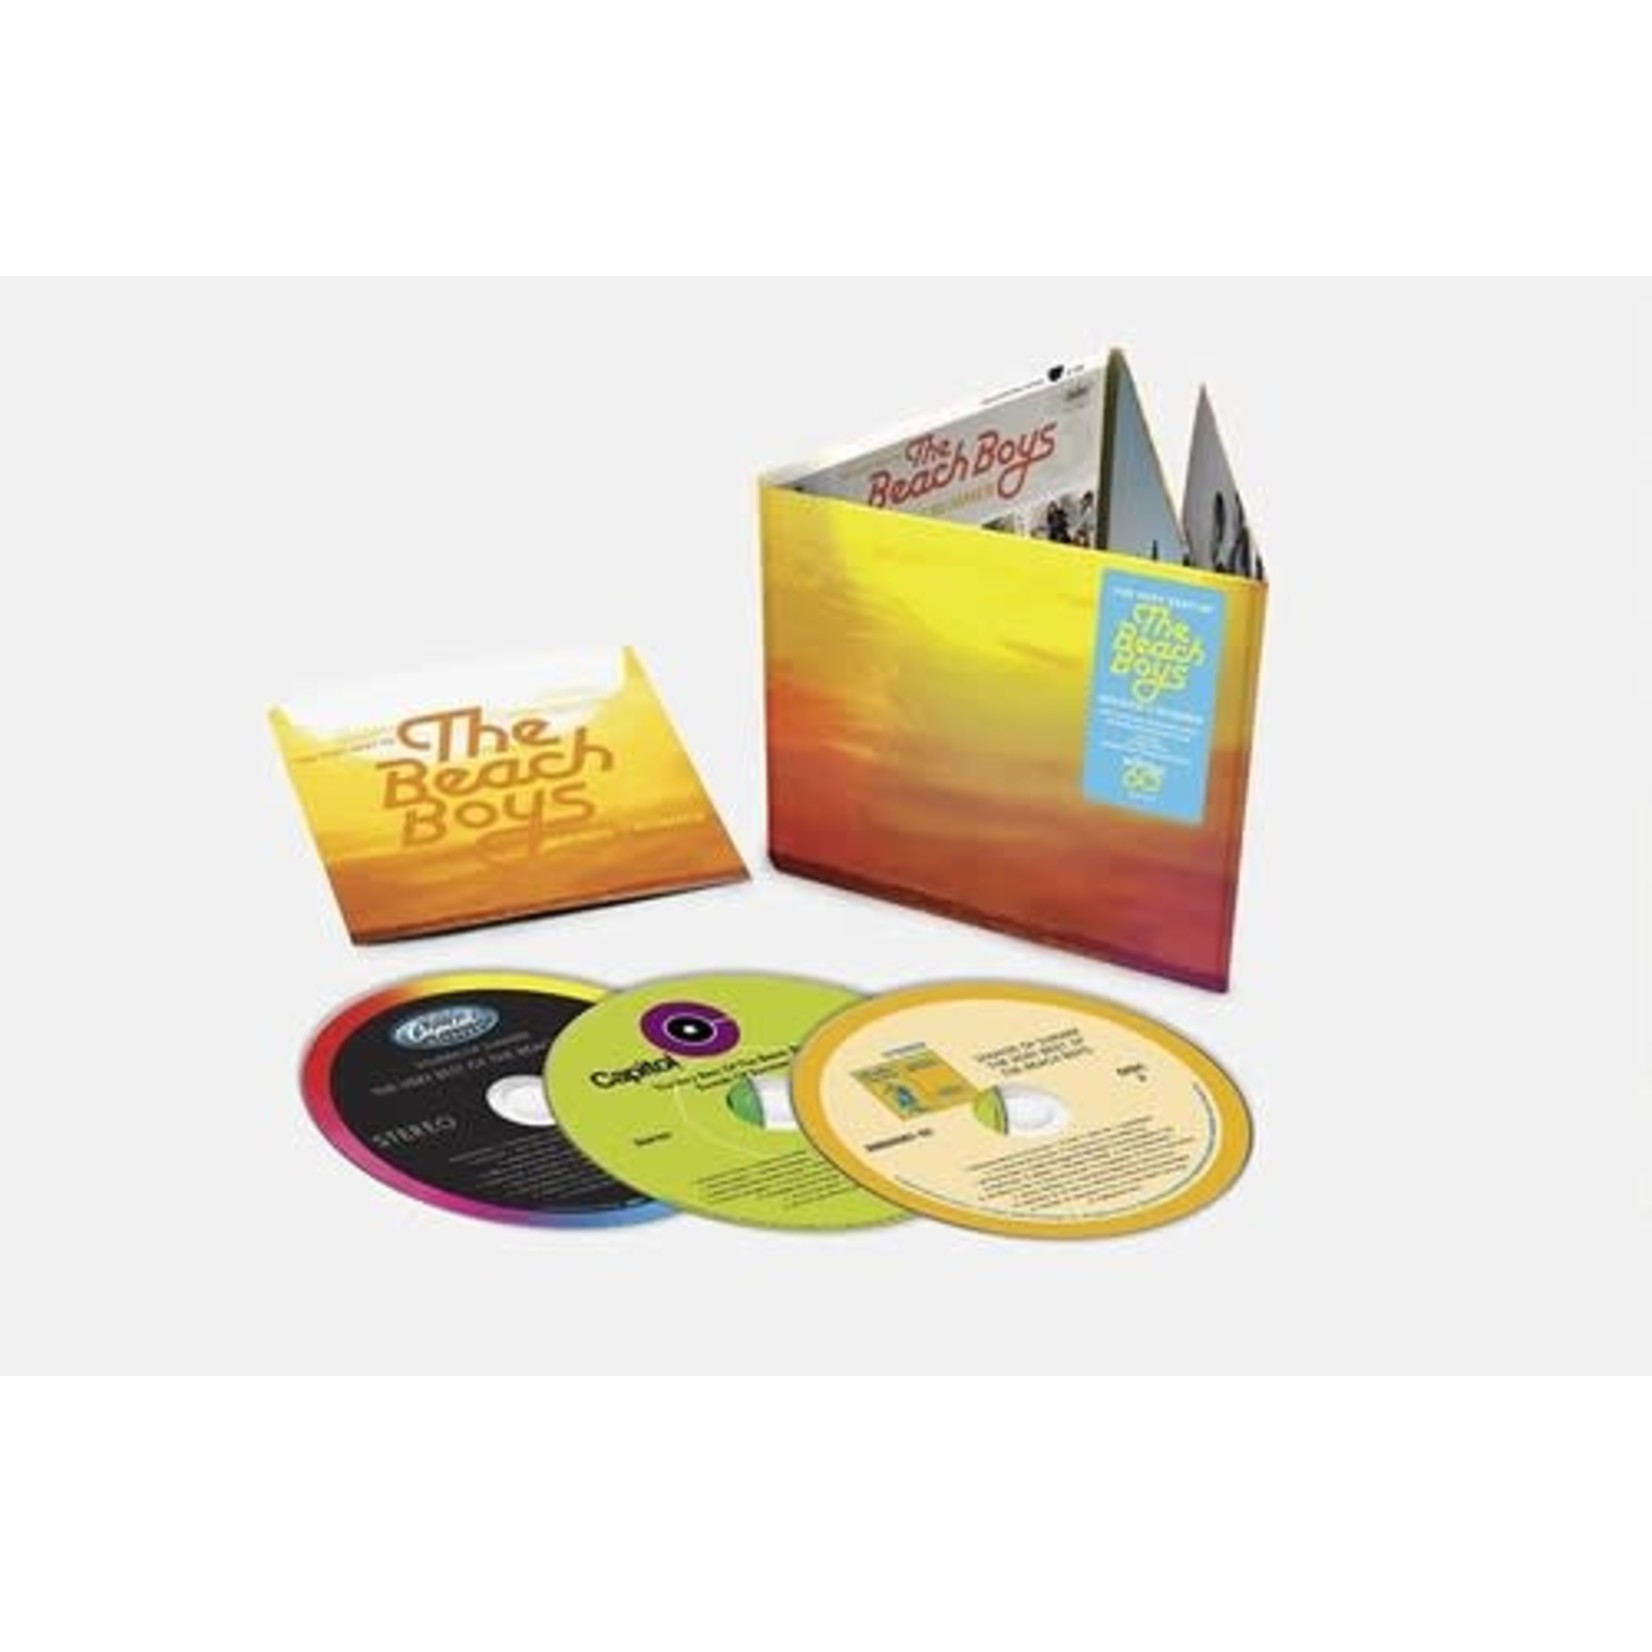 Beach Boys - The Sounds Of Summer: The Very Best Of The Beach Boys (Expanded Ed) [3CD]